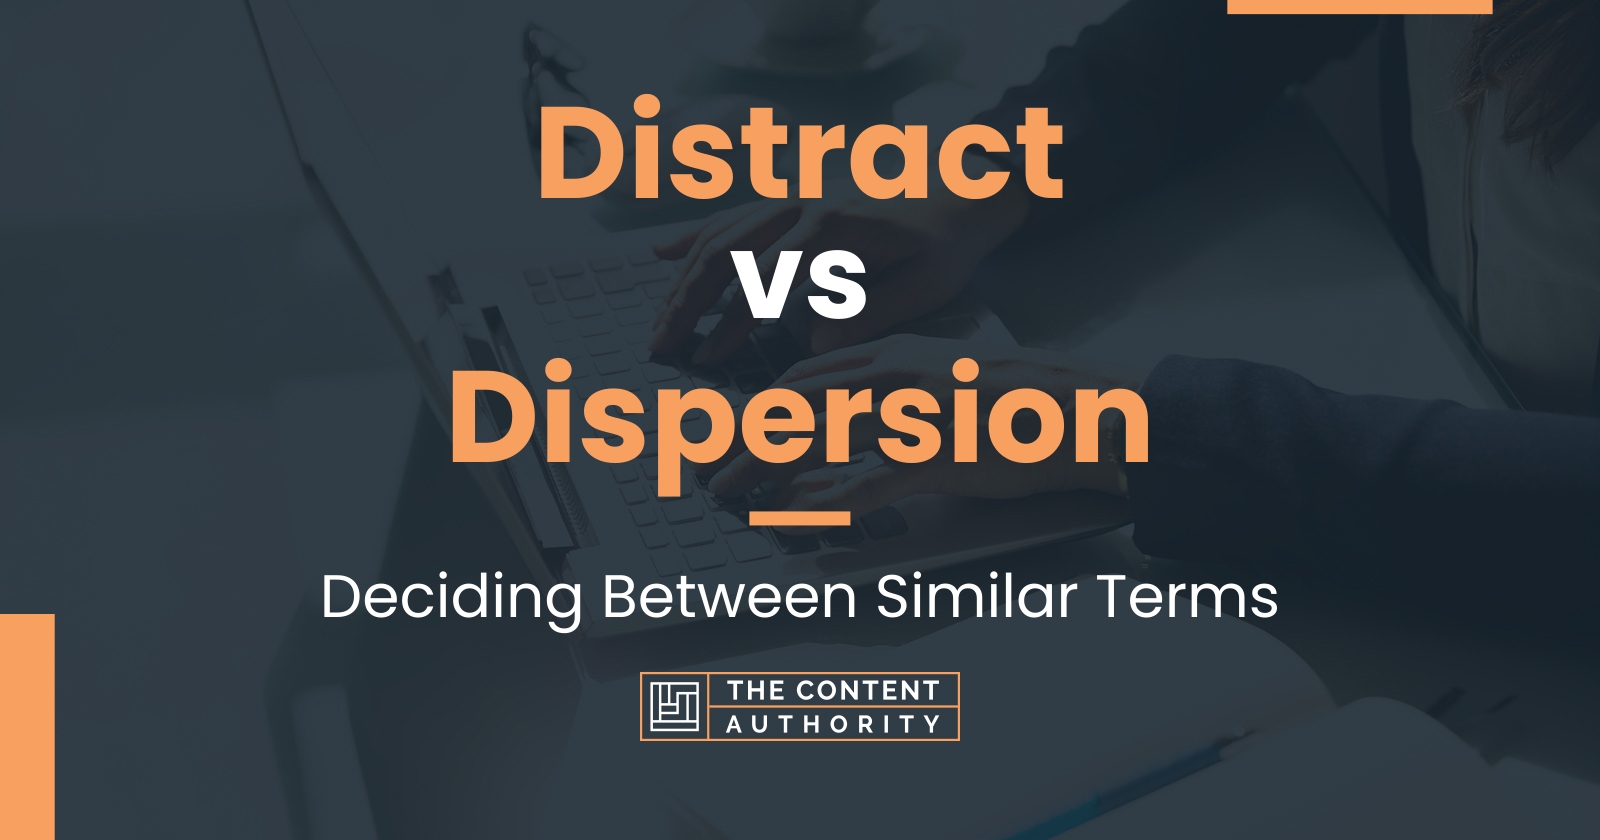 Distract vs Dispersion: Deciding Between Similar Terms